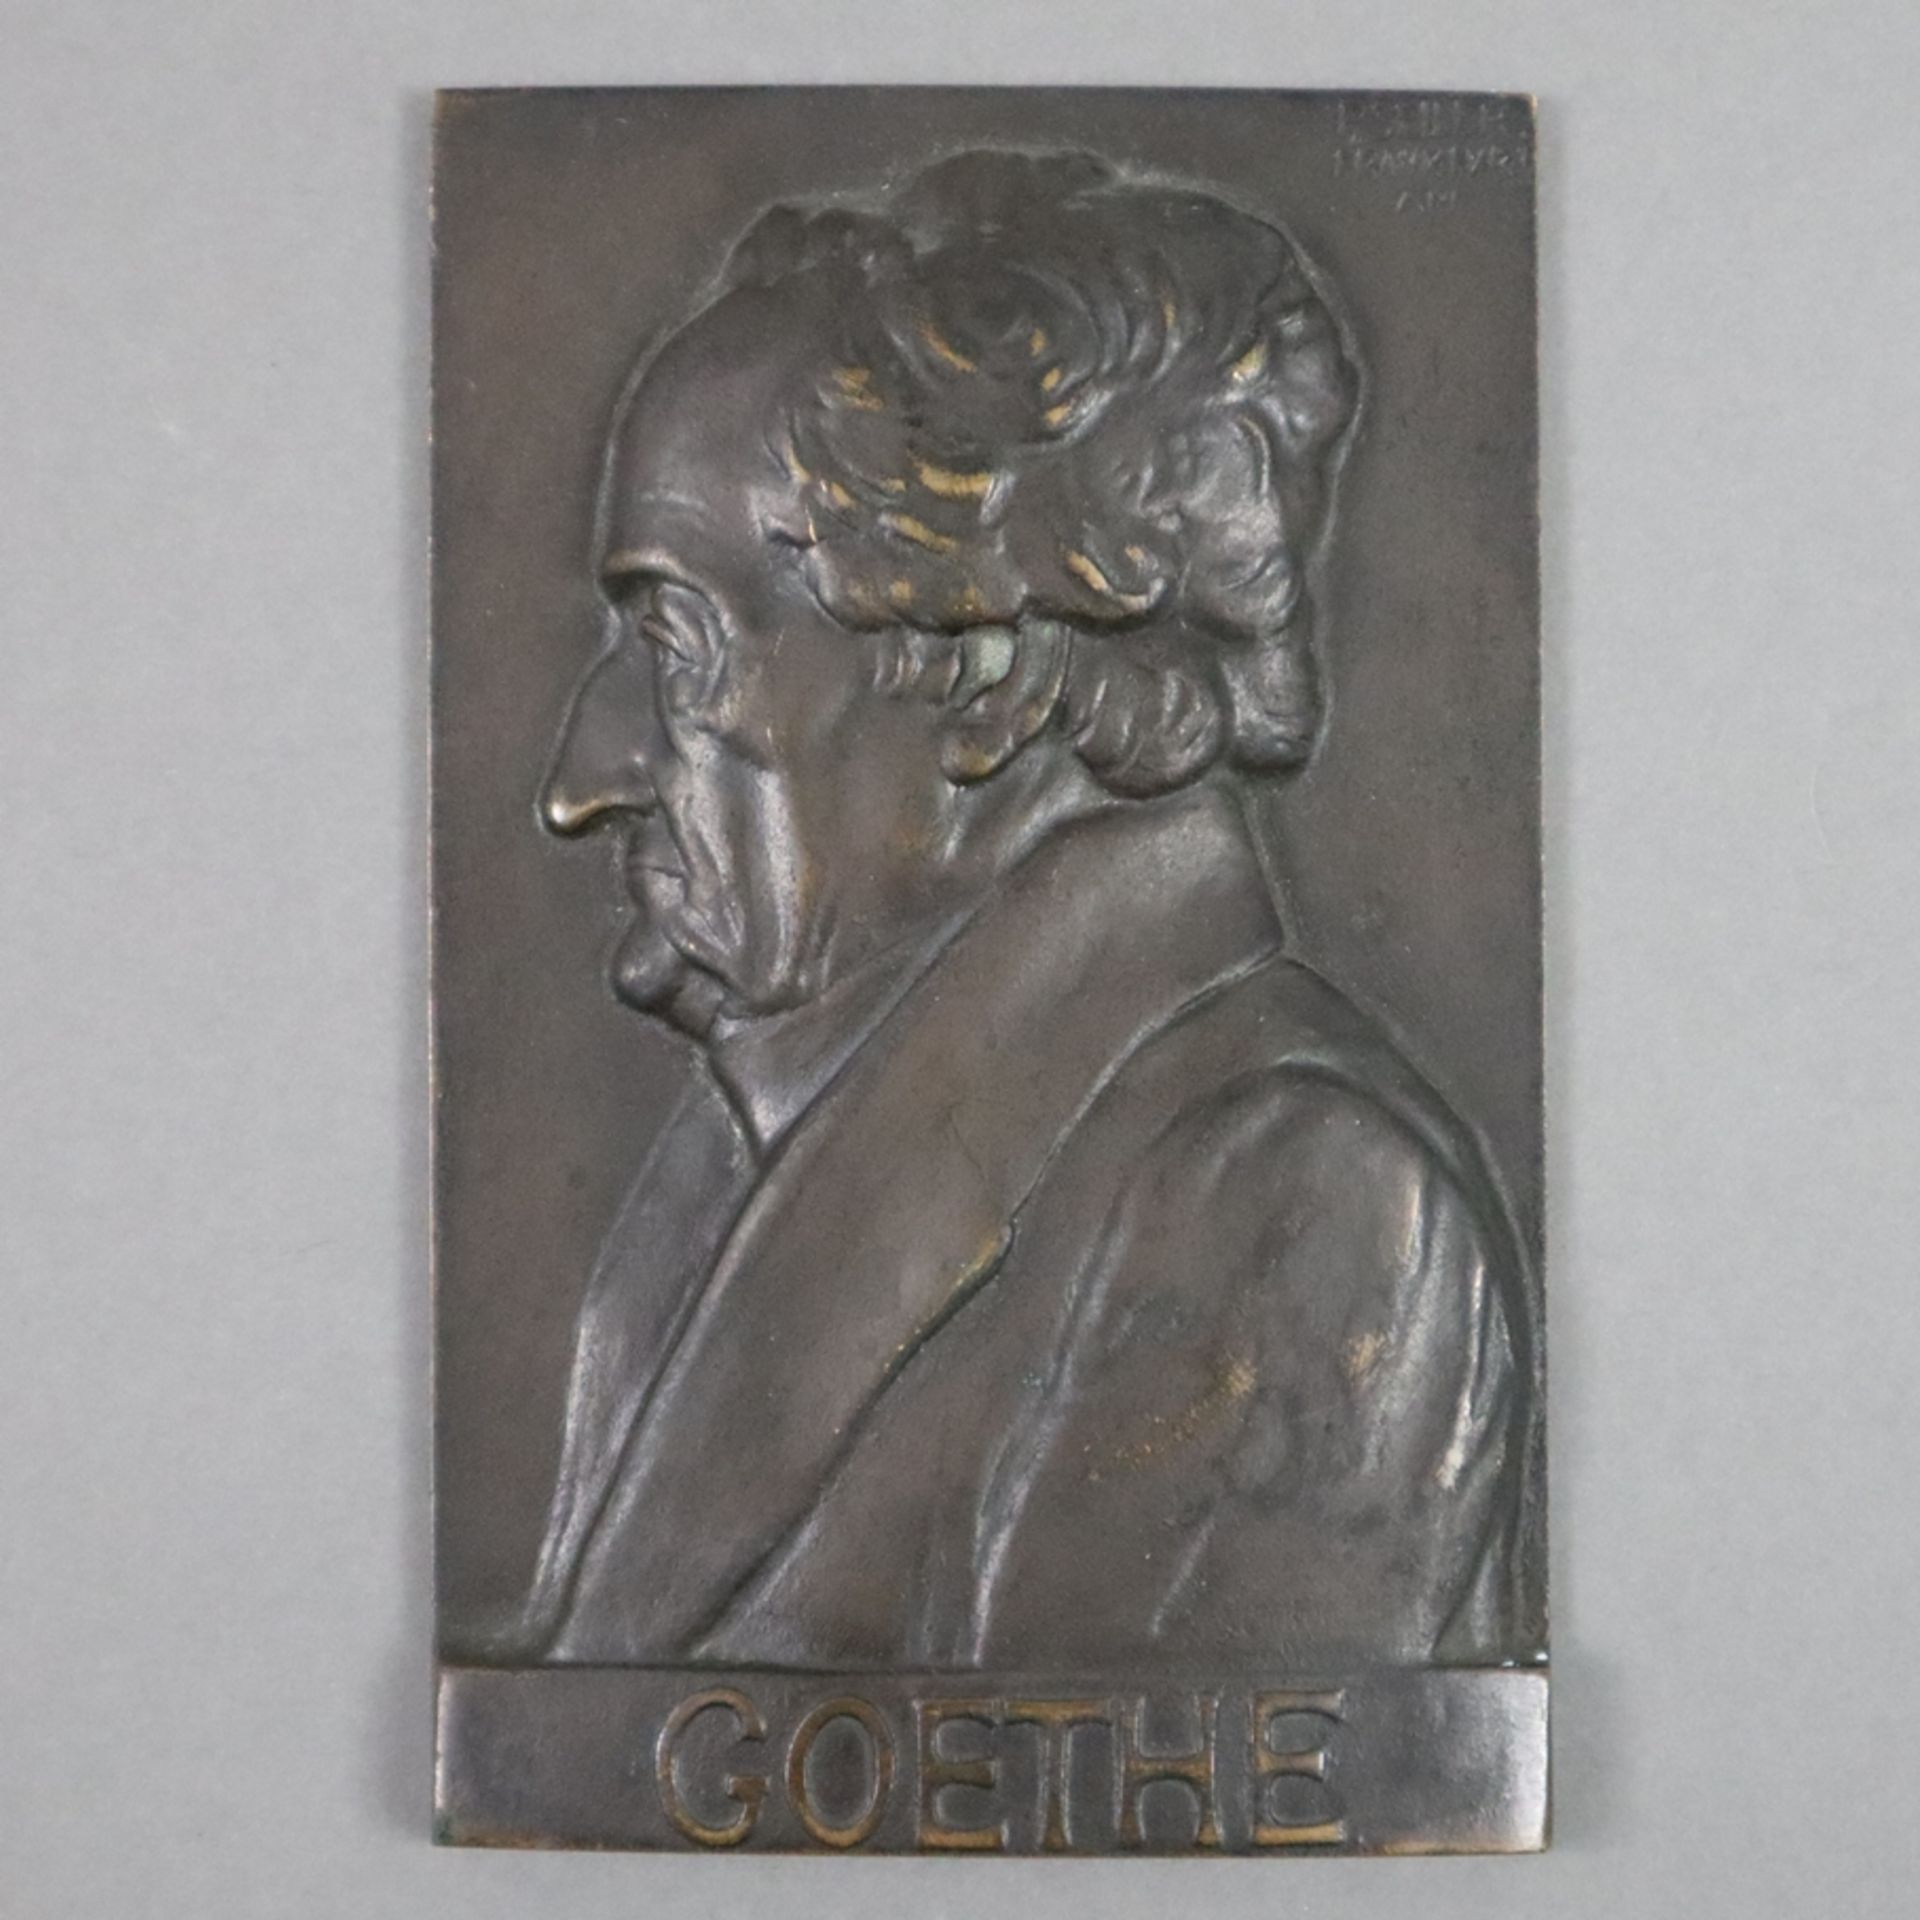 Seiler, Paul (1873 Neustadt im Schwarzwald - 1934 Frankfurt am Main) - Reliefbild "Goethe", Bronze,